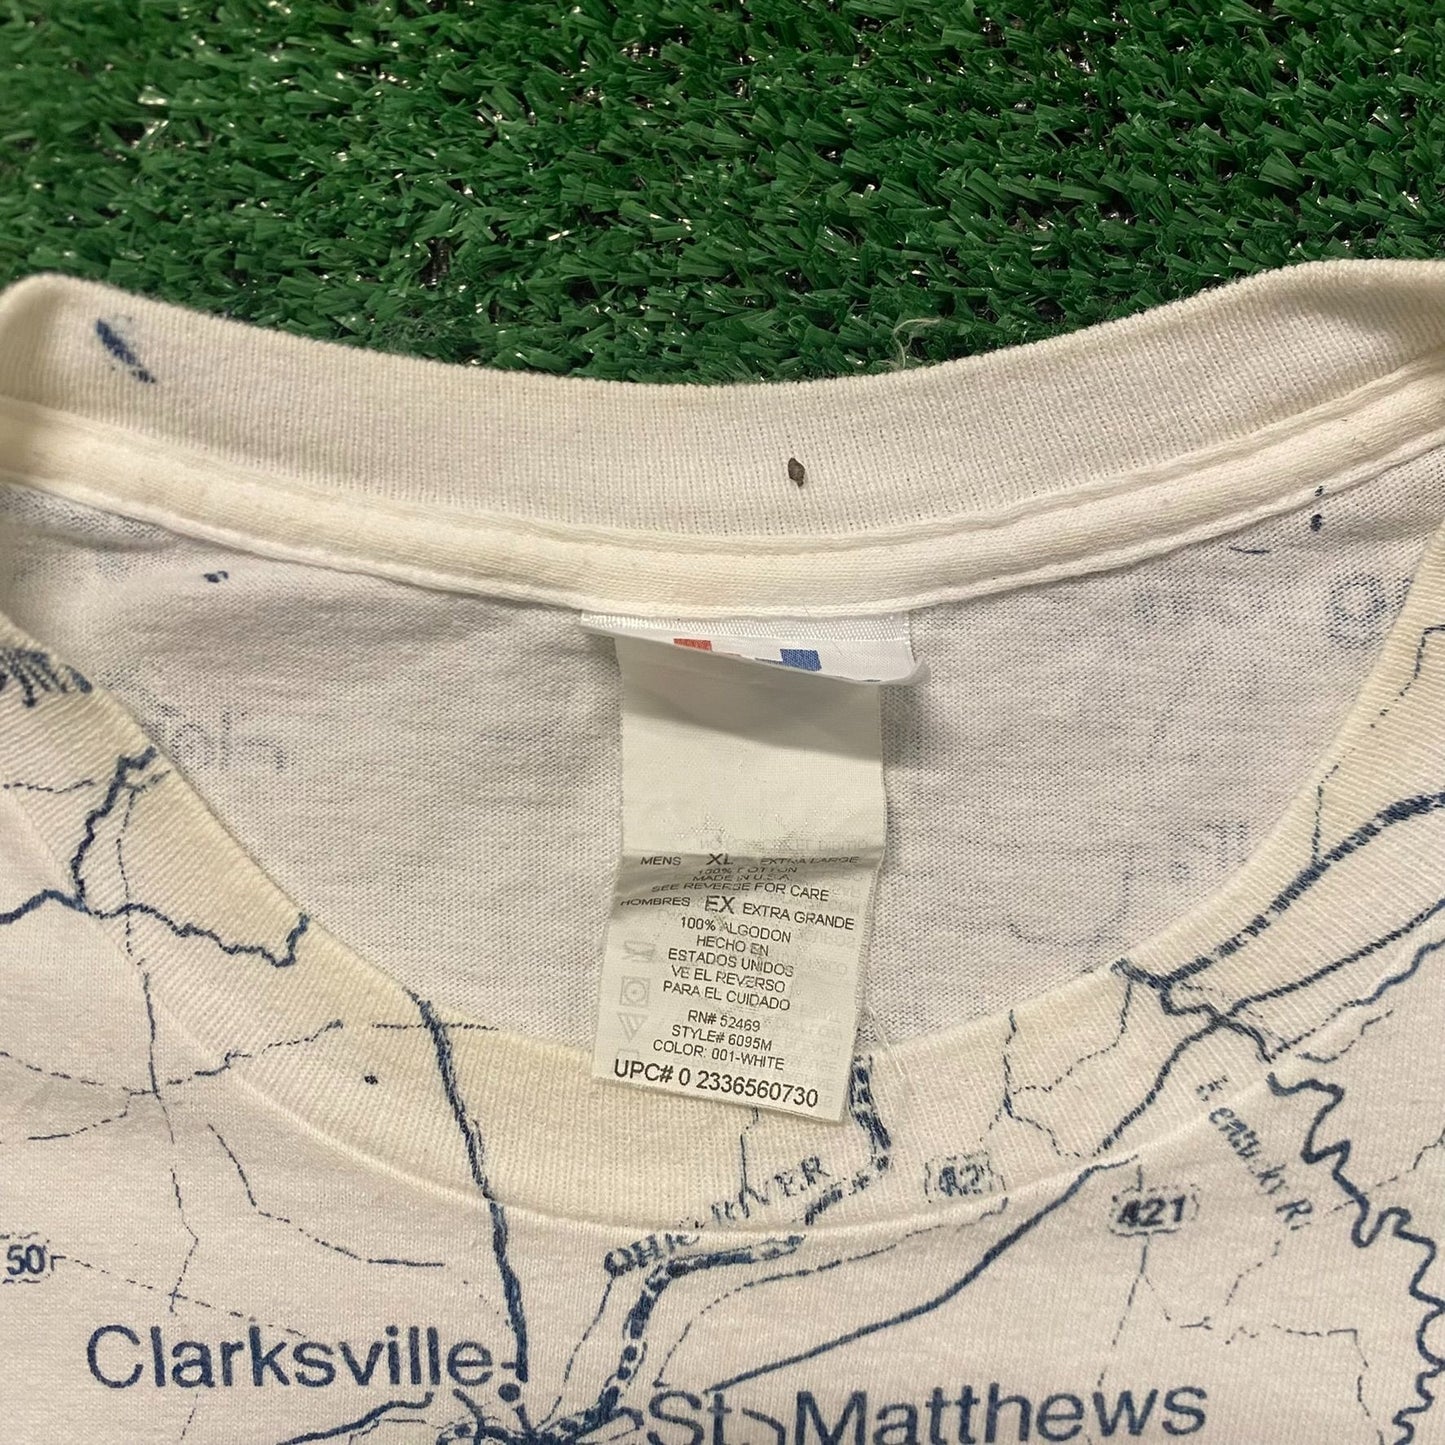 Kentucky Road Map Vintage 90s Grunge T-Shirt